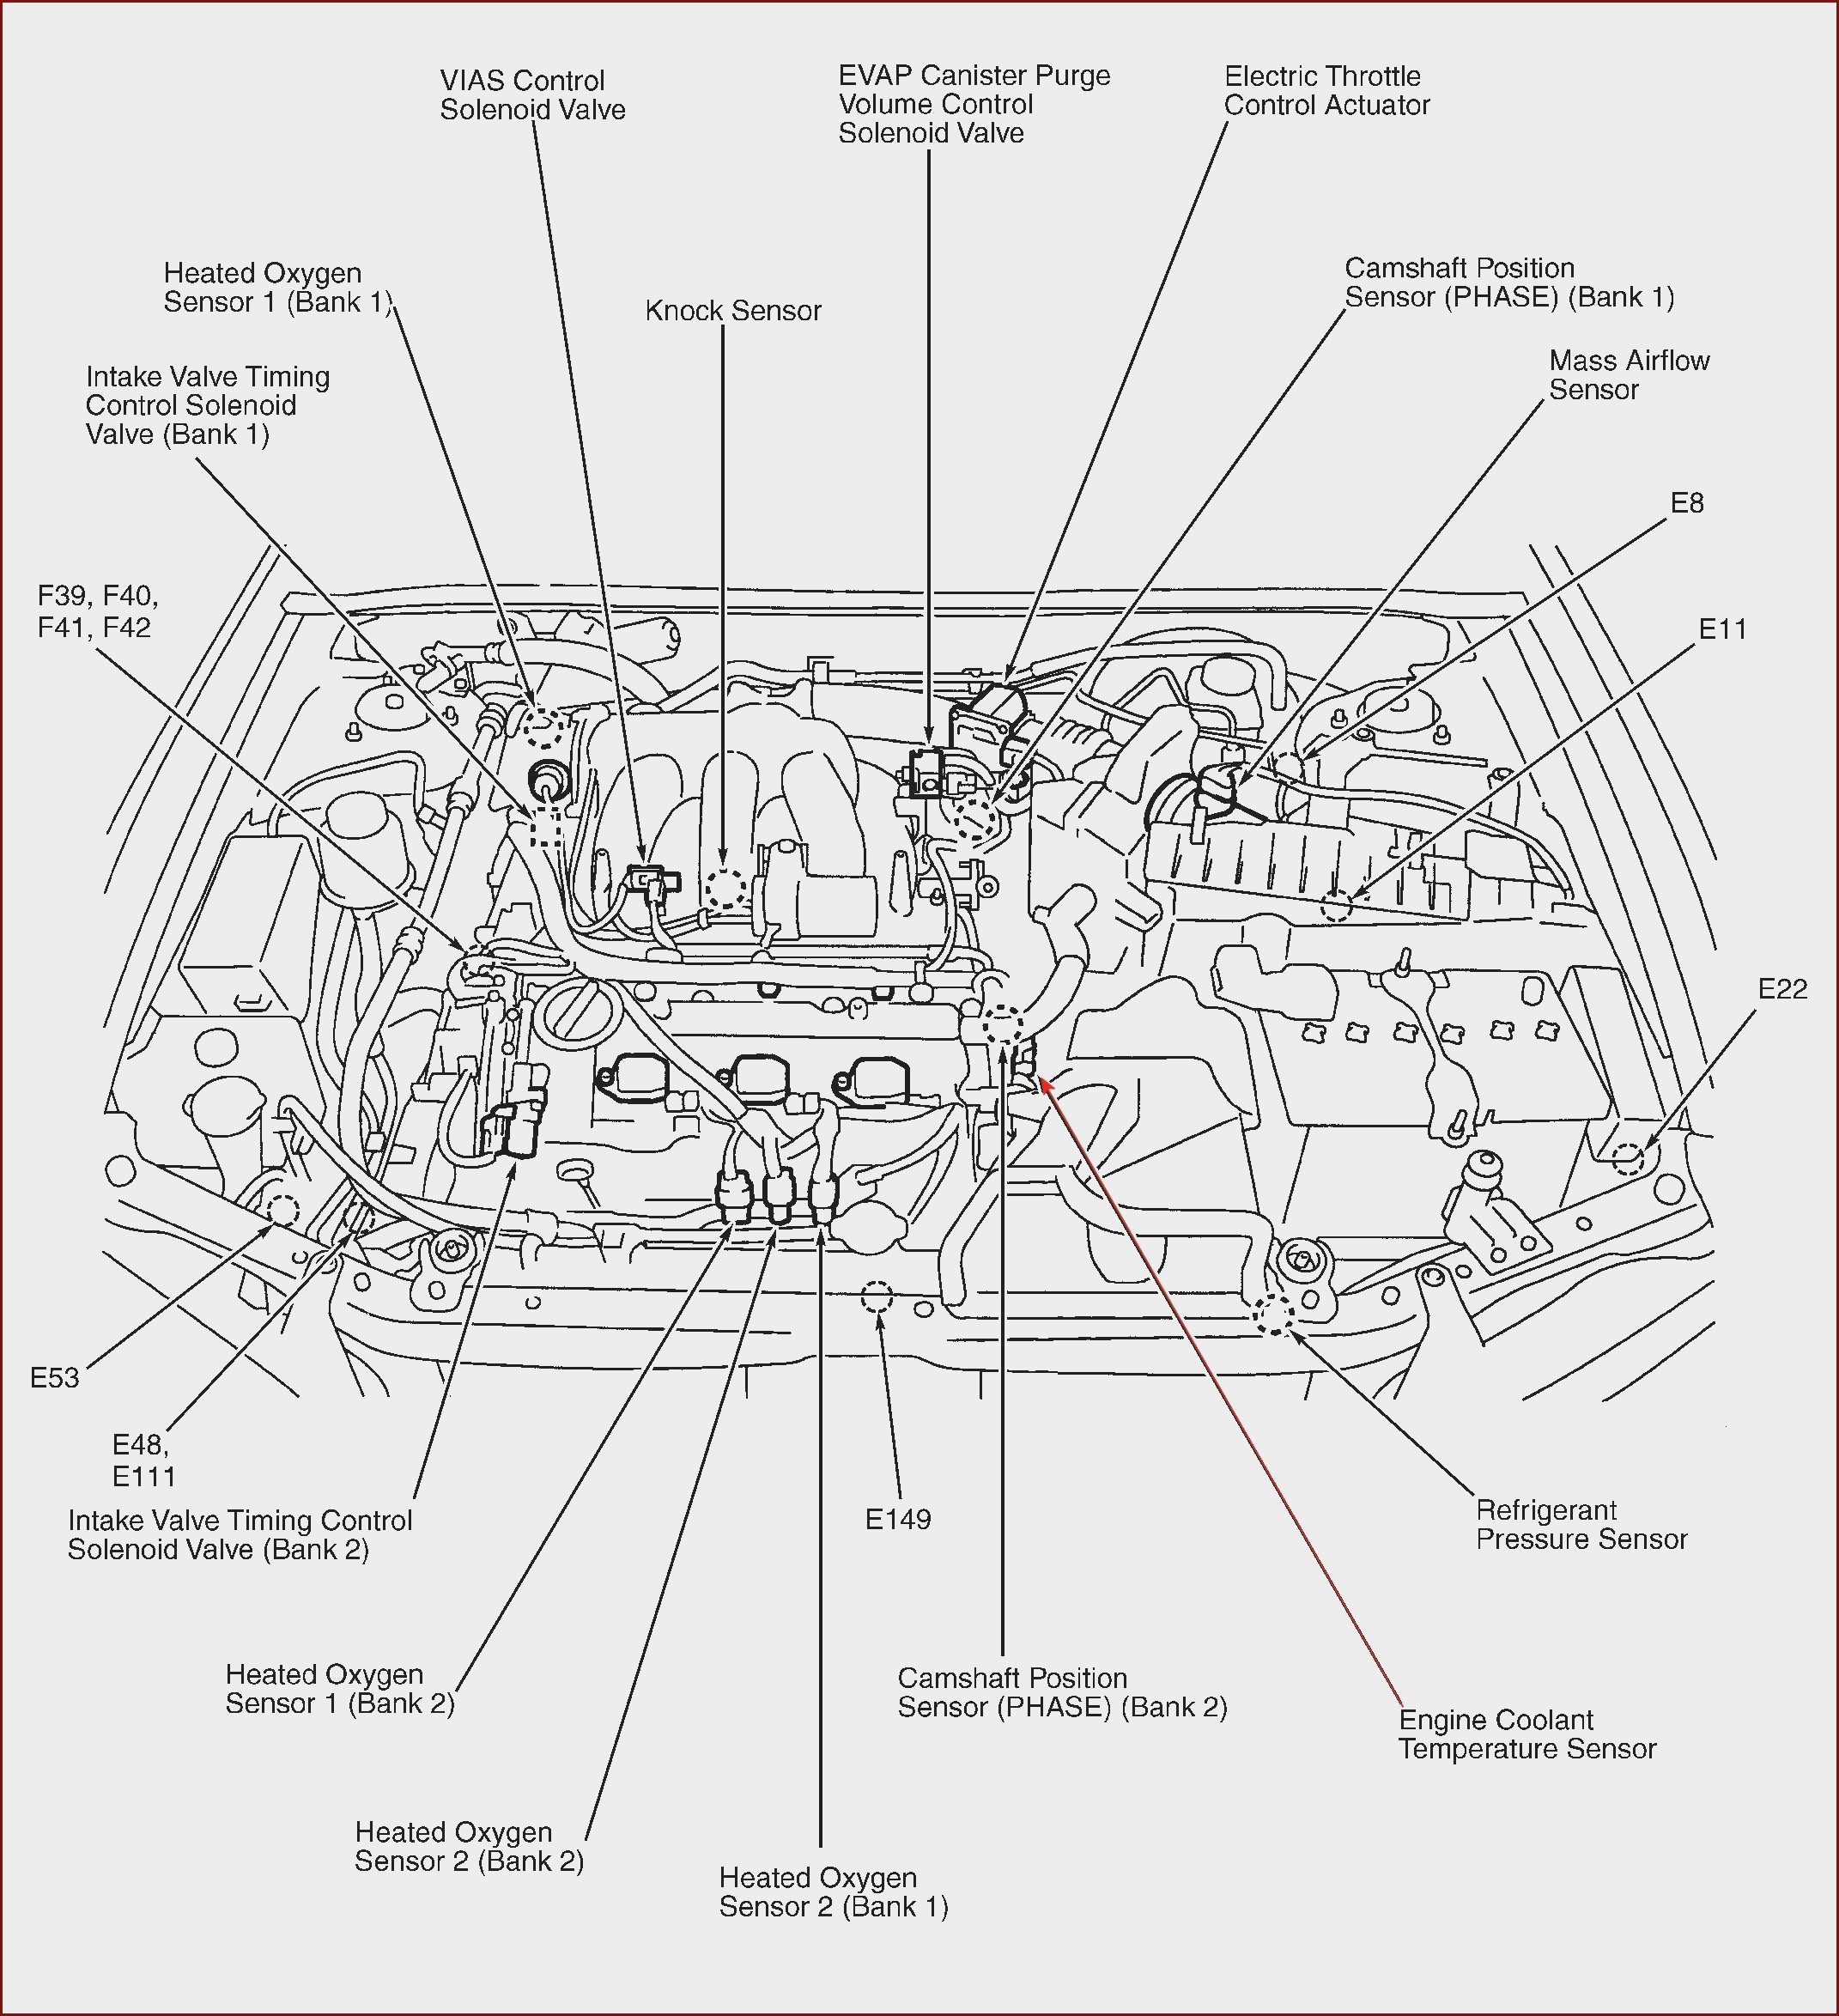 Nissan Altima Engine Diagram 1995 Nissan Pathfinder Starter Wiring Diagram at Manuals Library Of Nissan Altima Engine Diagram